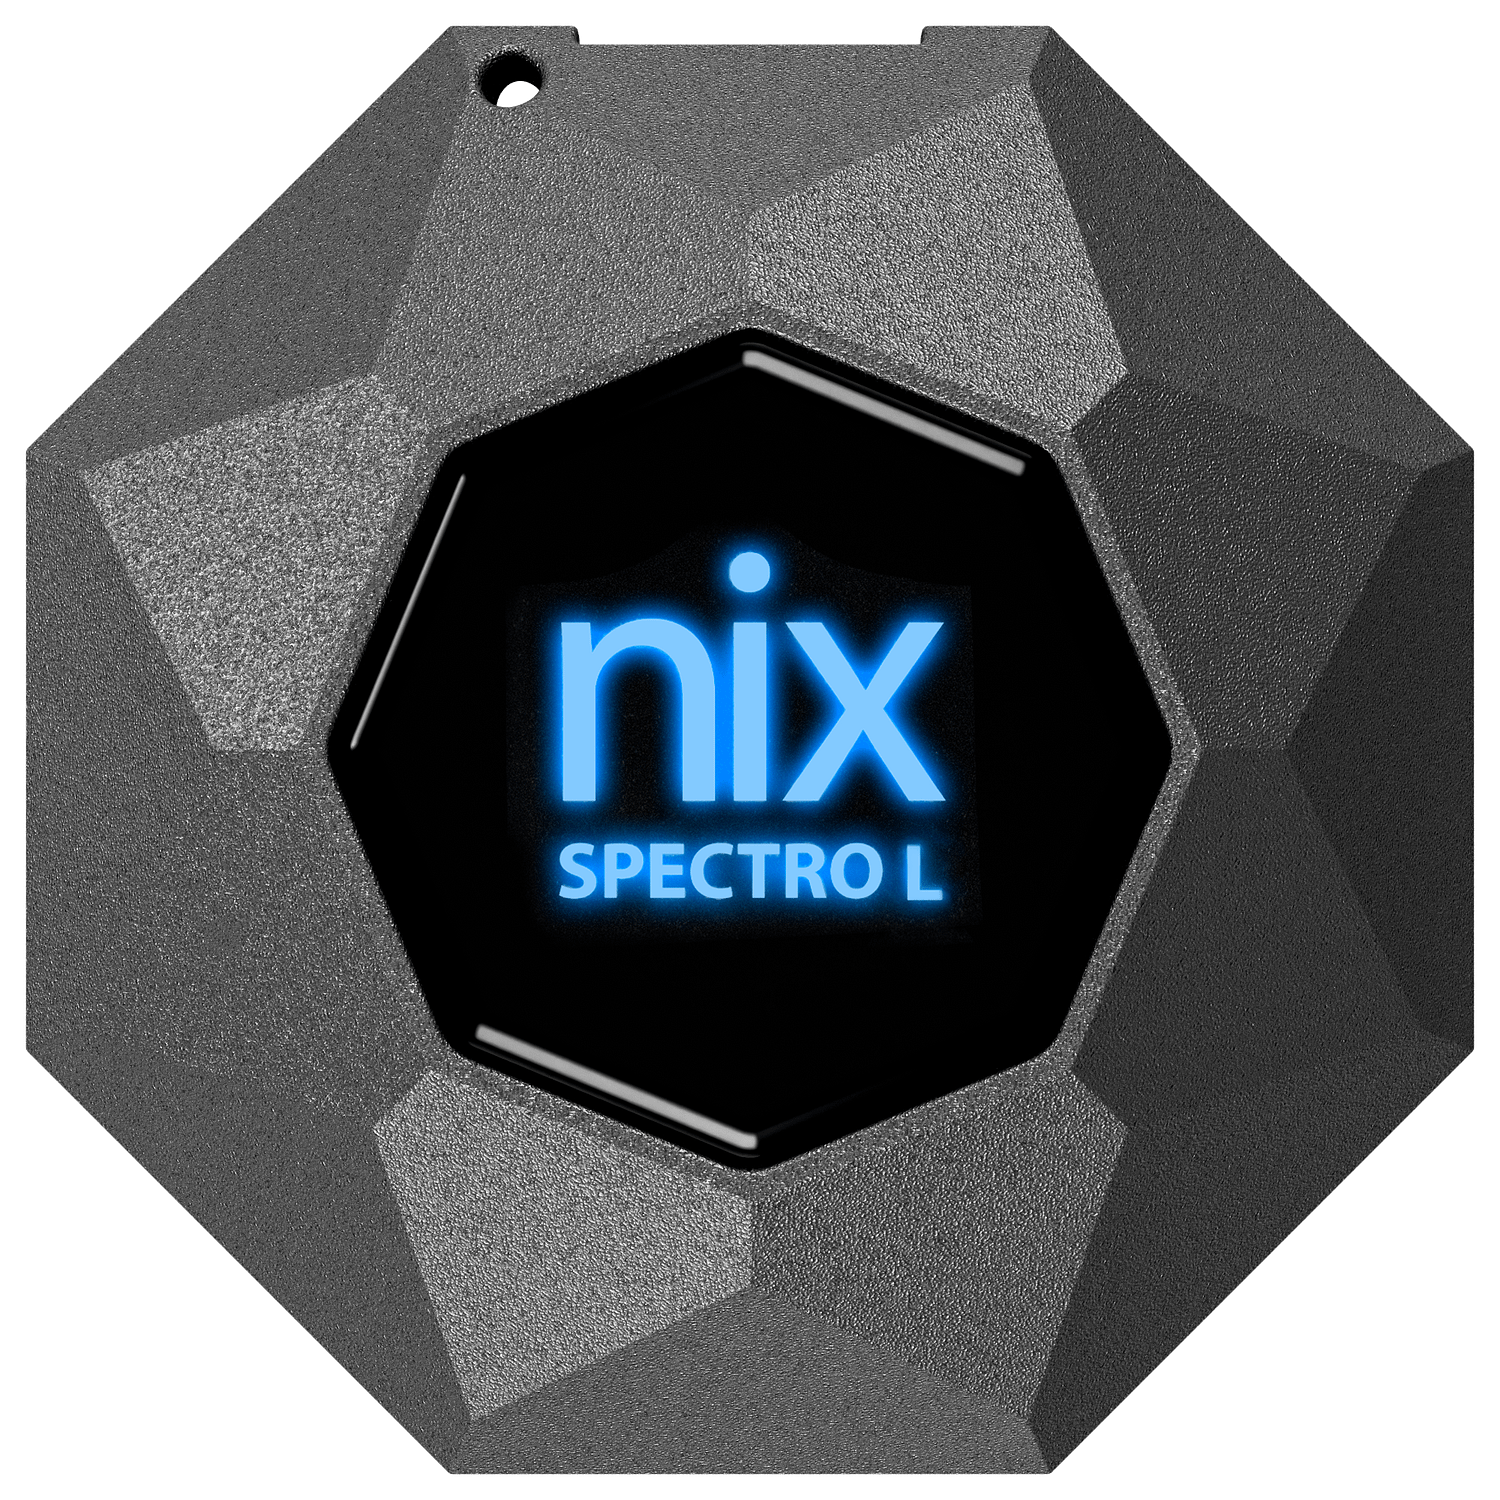 Nix Spectro L light on